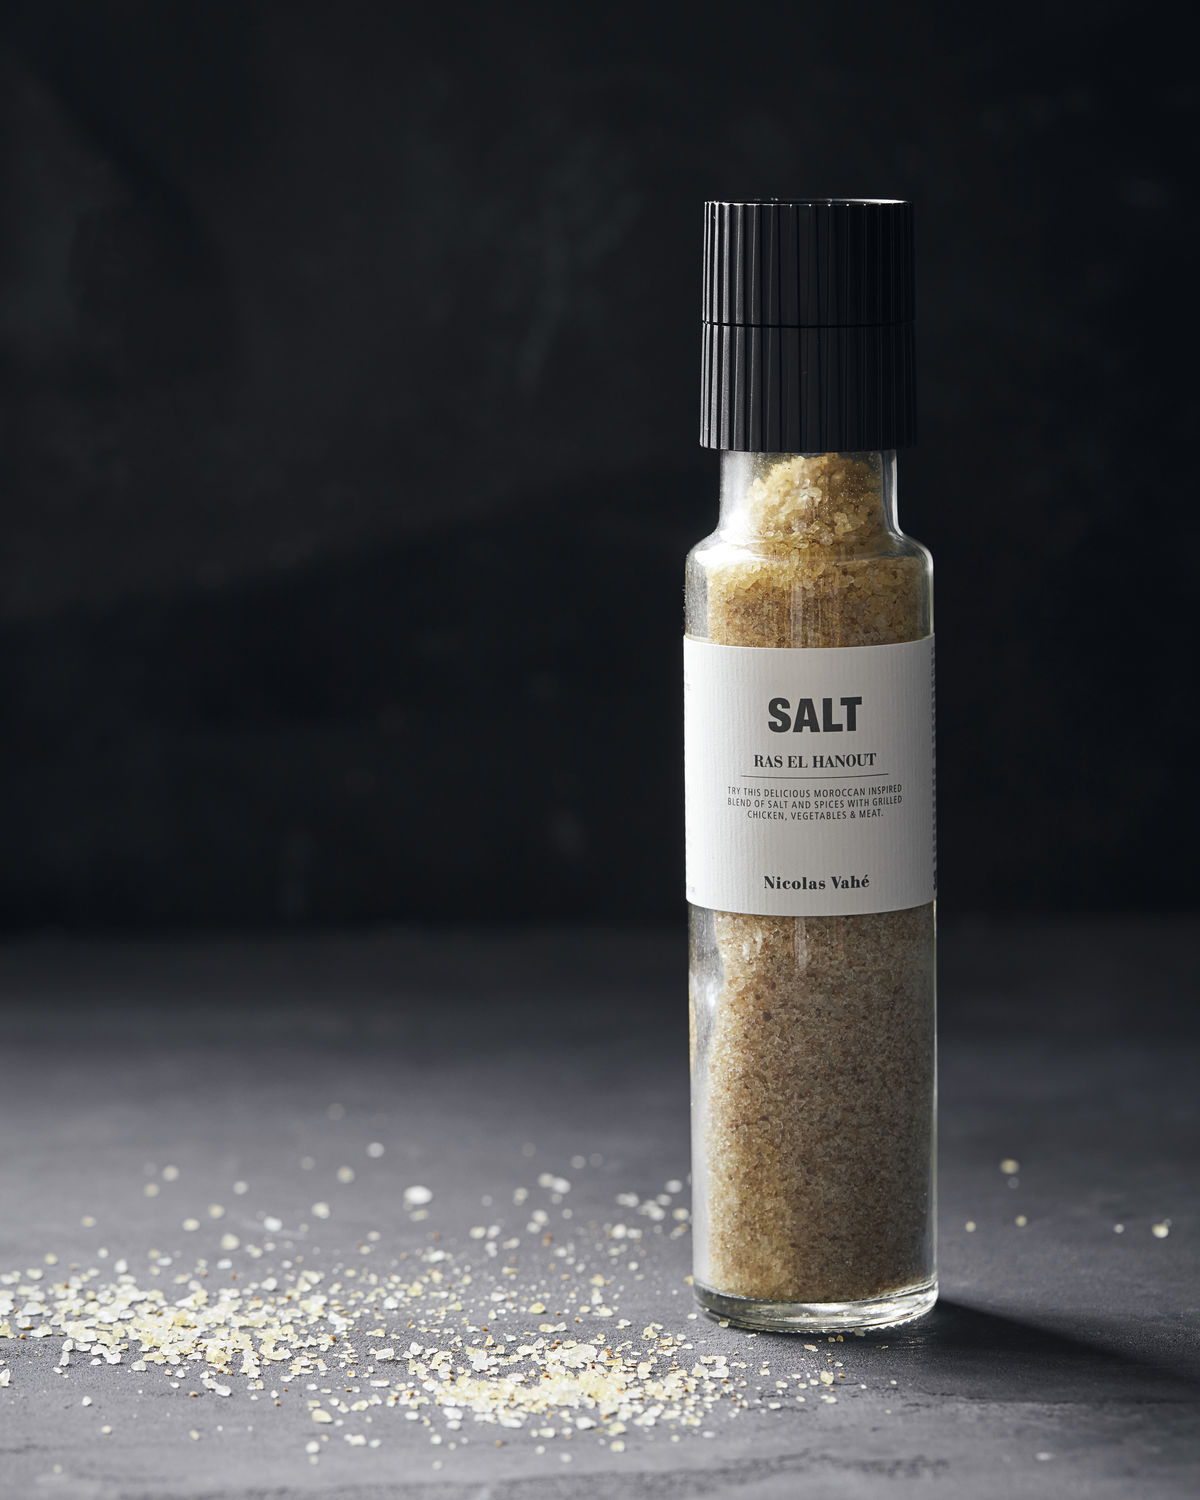 Salt, Ras El Hanout, 300 g.